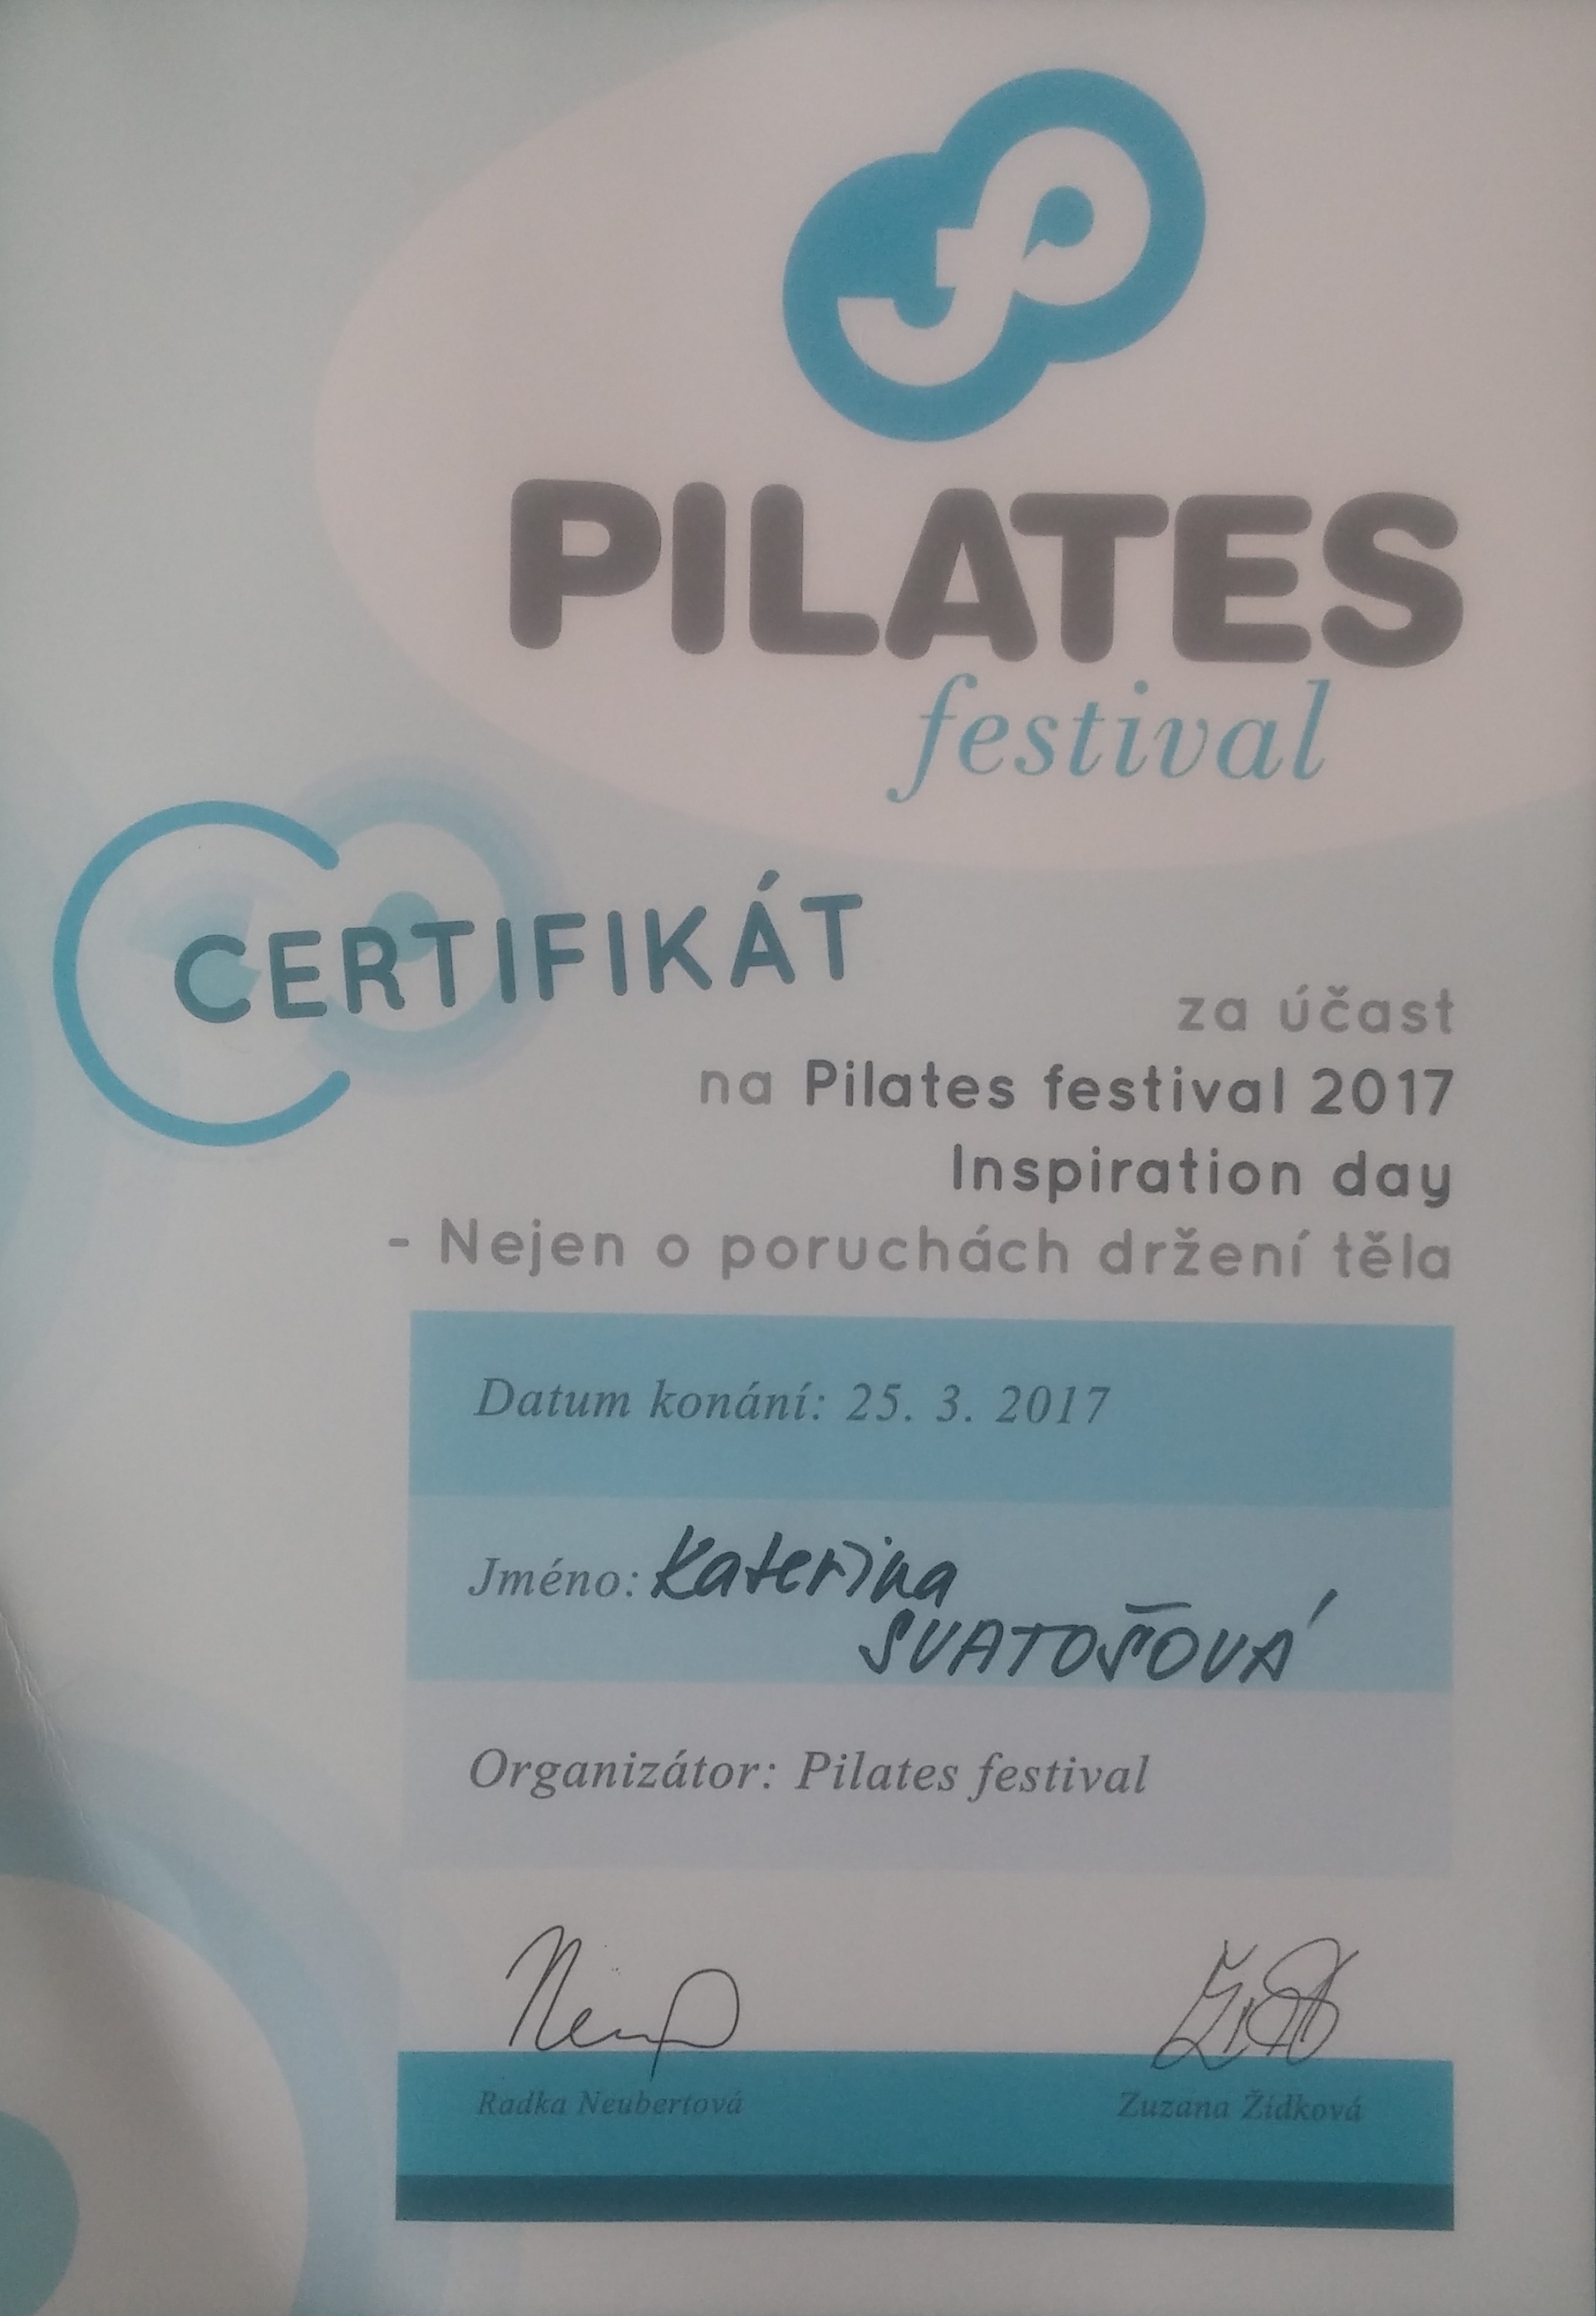 PILATES festival